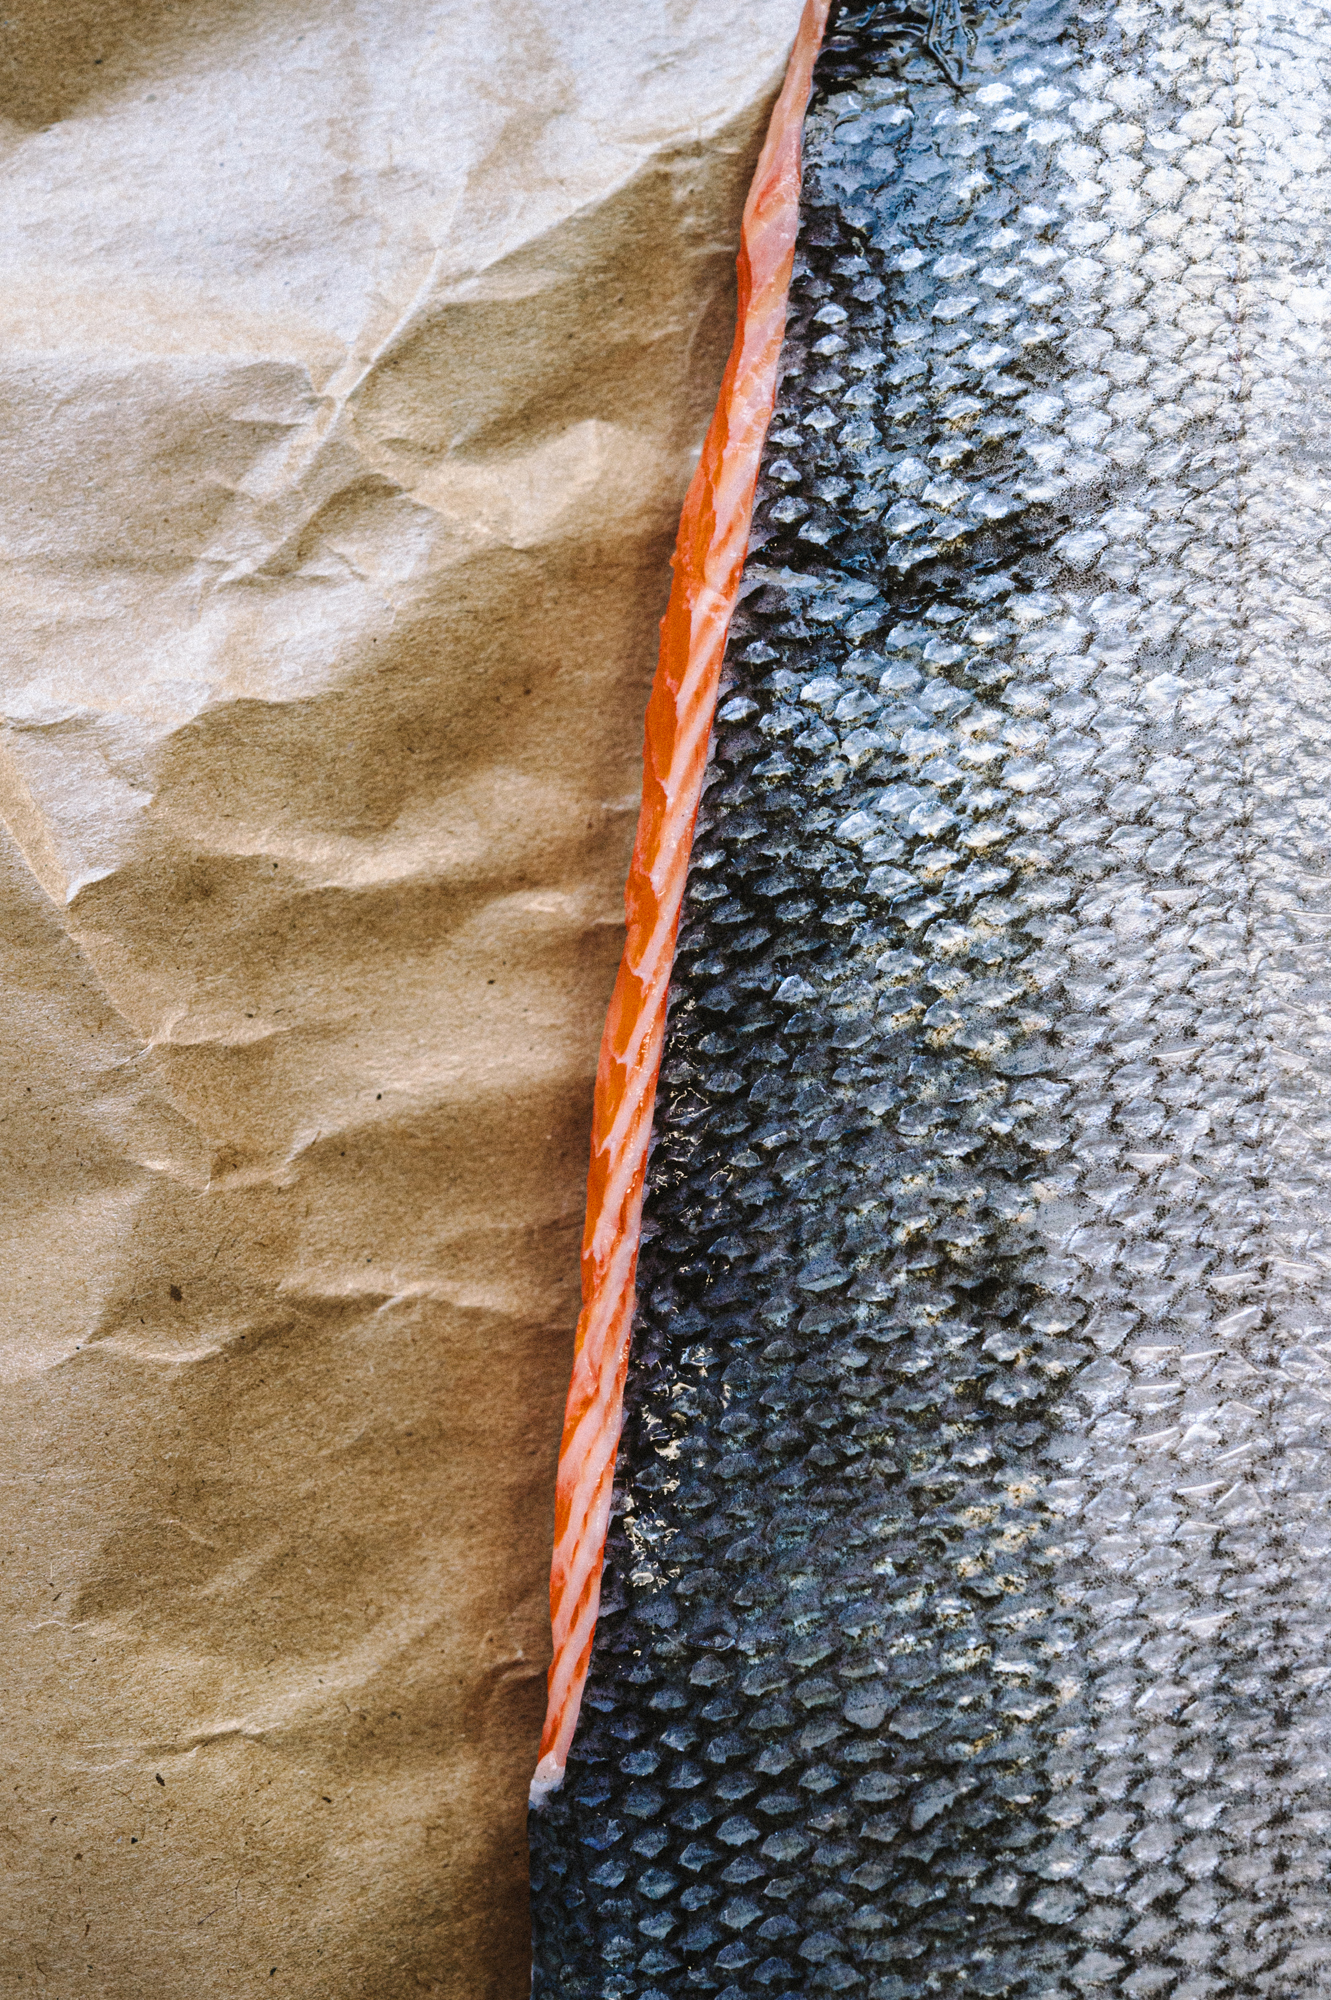 salmon-skin-close-up